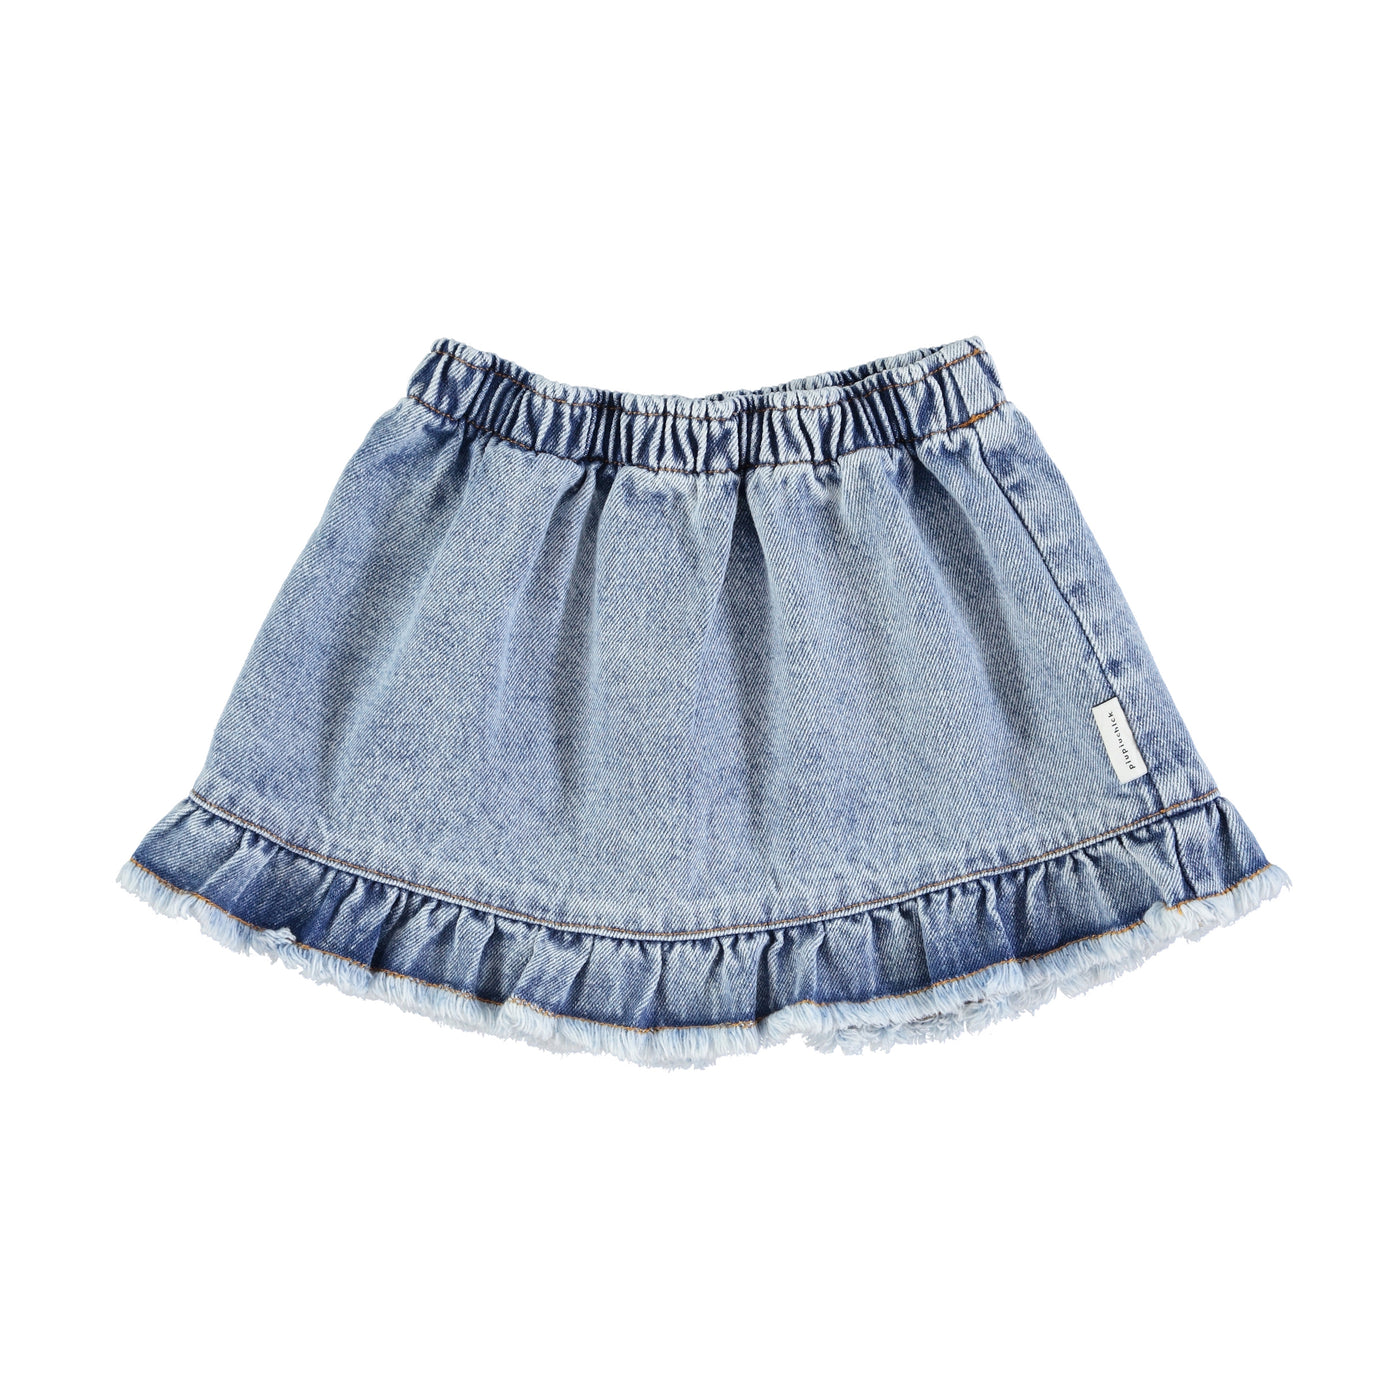 Piupiuchick short skirt with ruffles | light blue washed